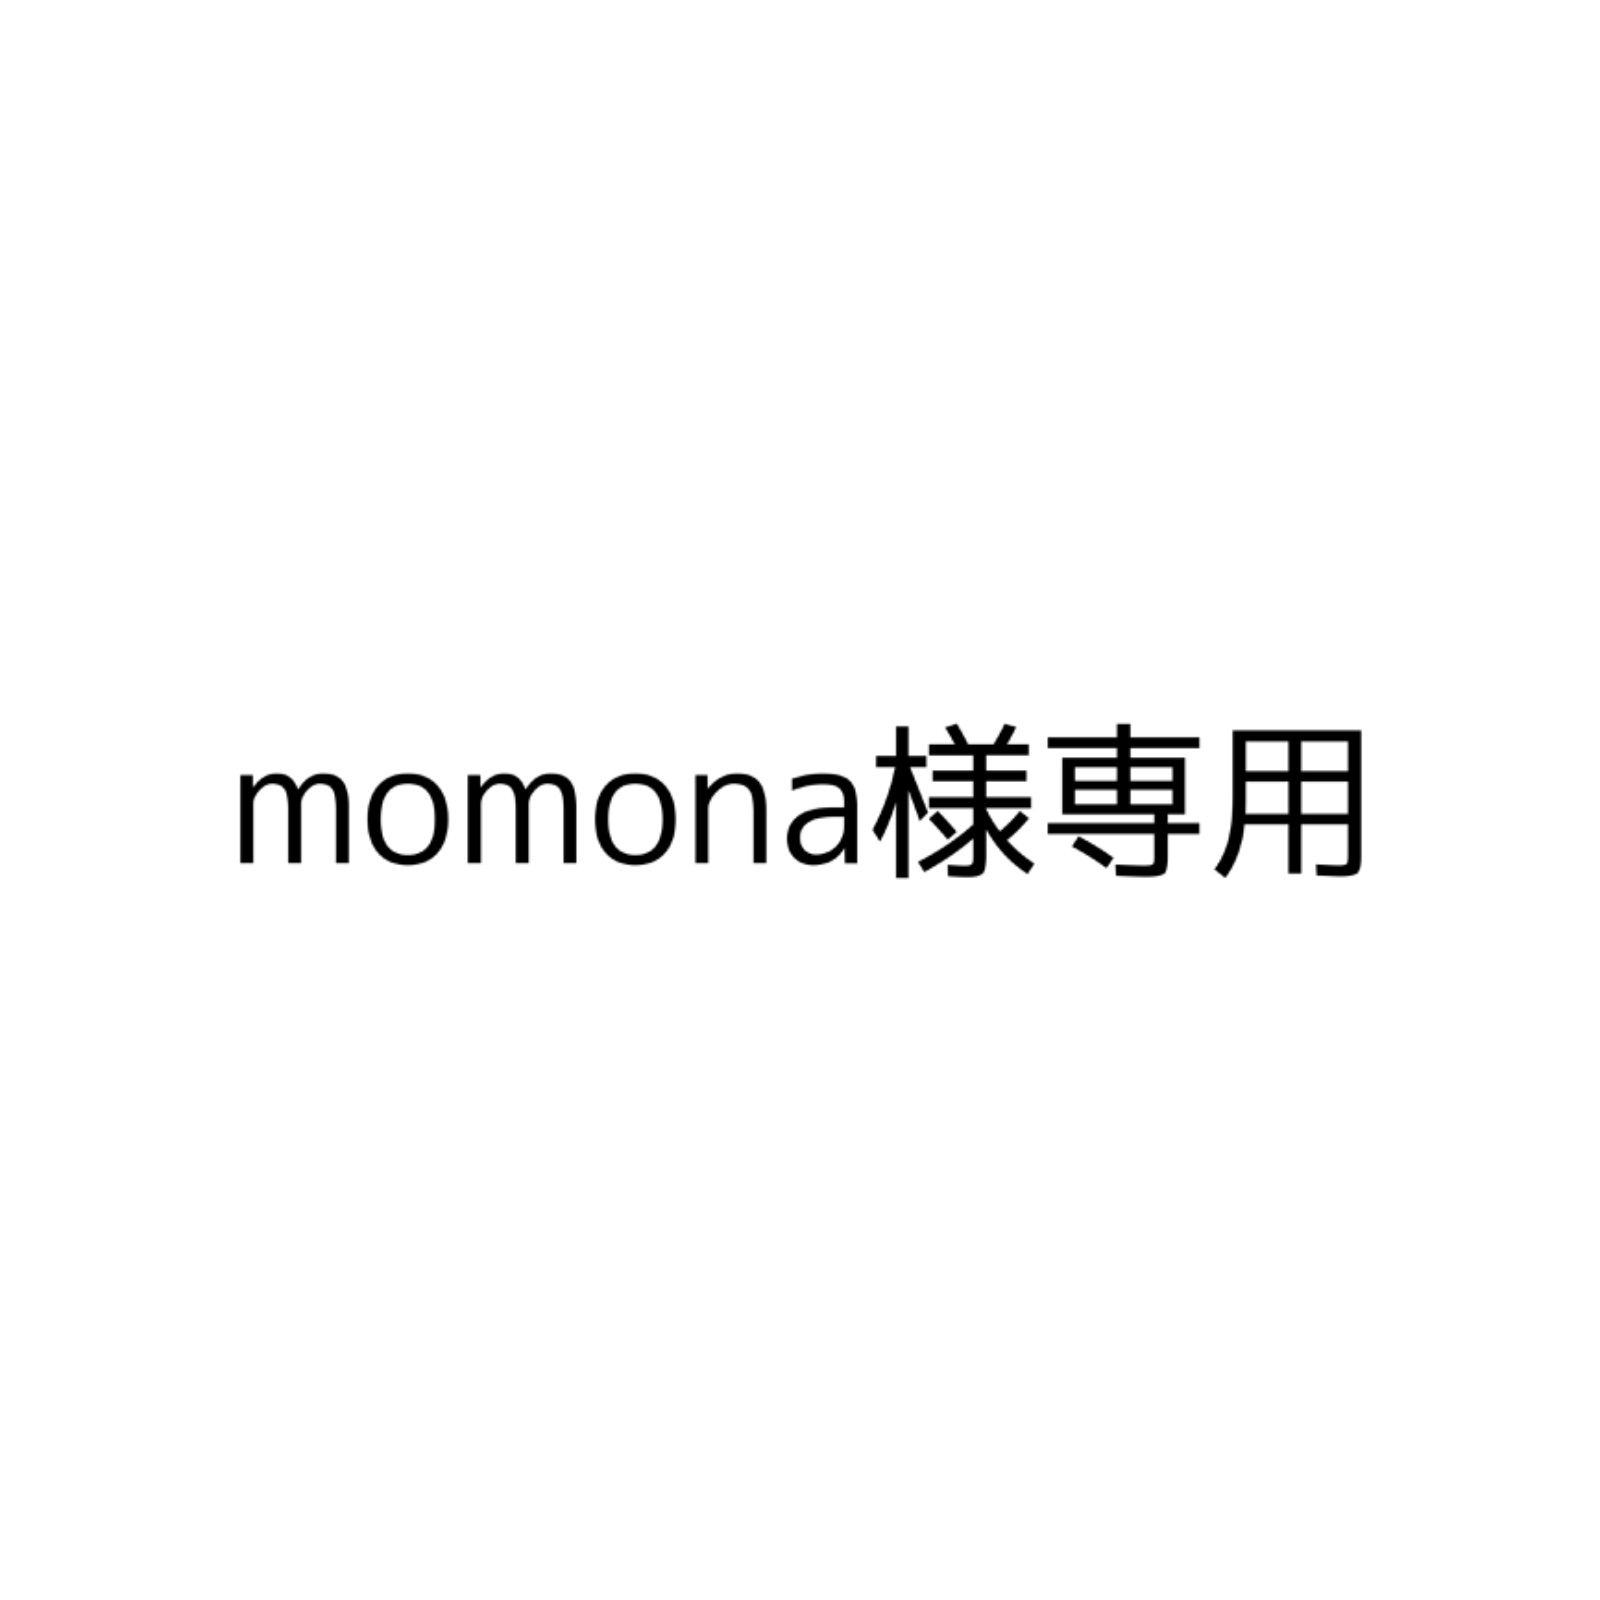 momona様 専用ページ ネイルチップ - メルカリ